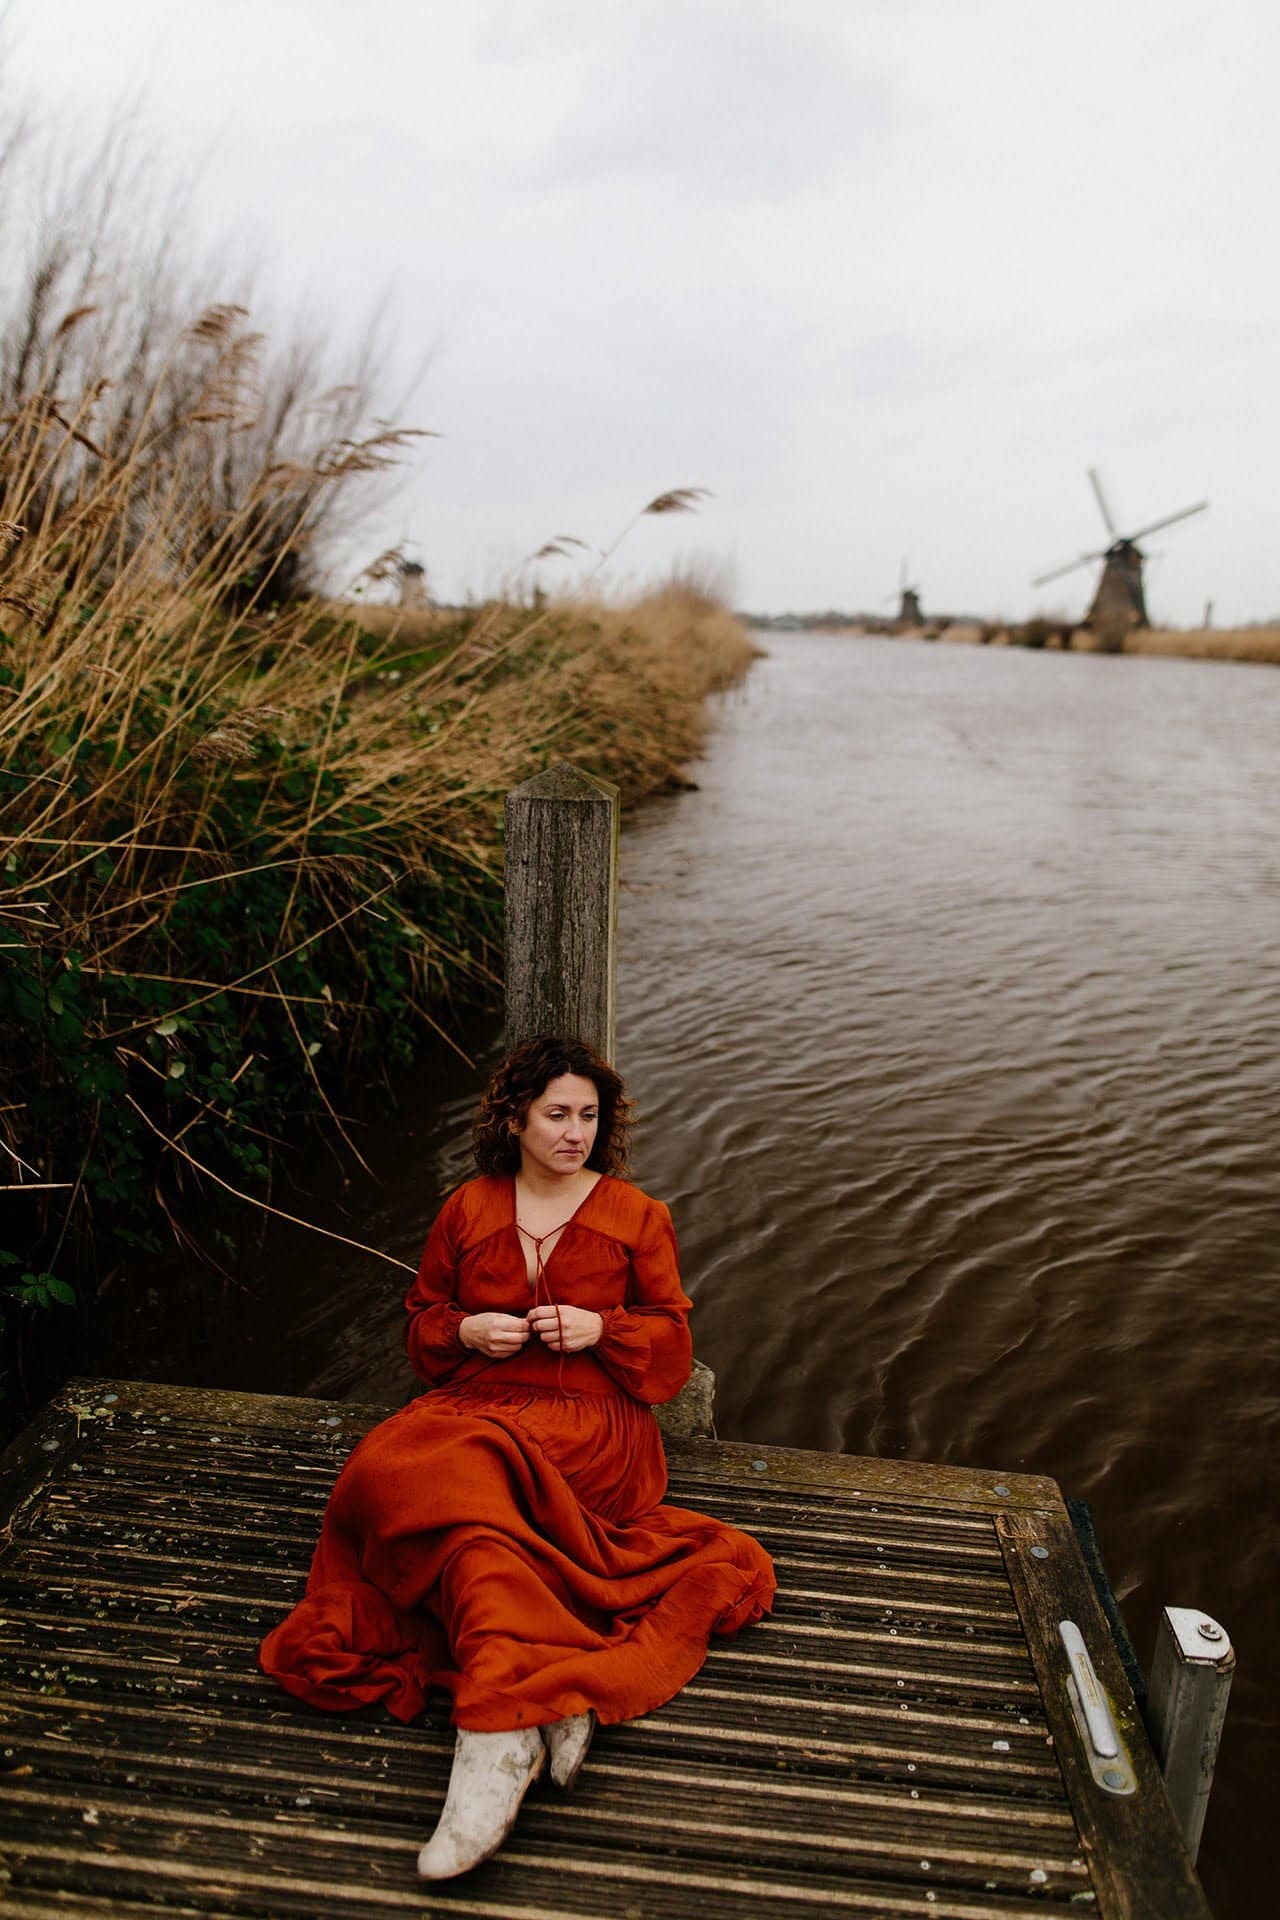 Photoshoot Kinderdijk Rotterdam Netherlands Windmills 2